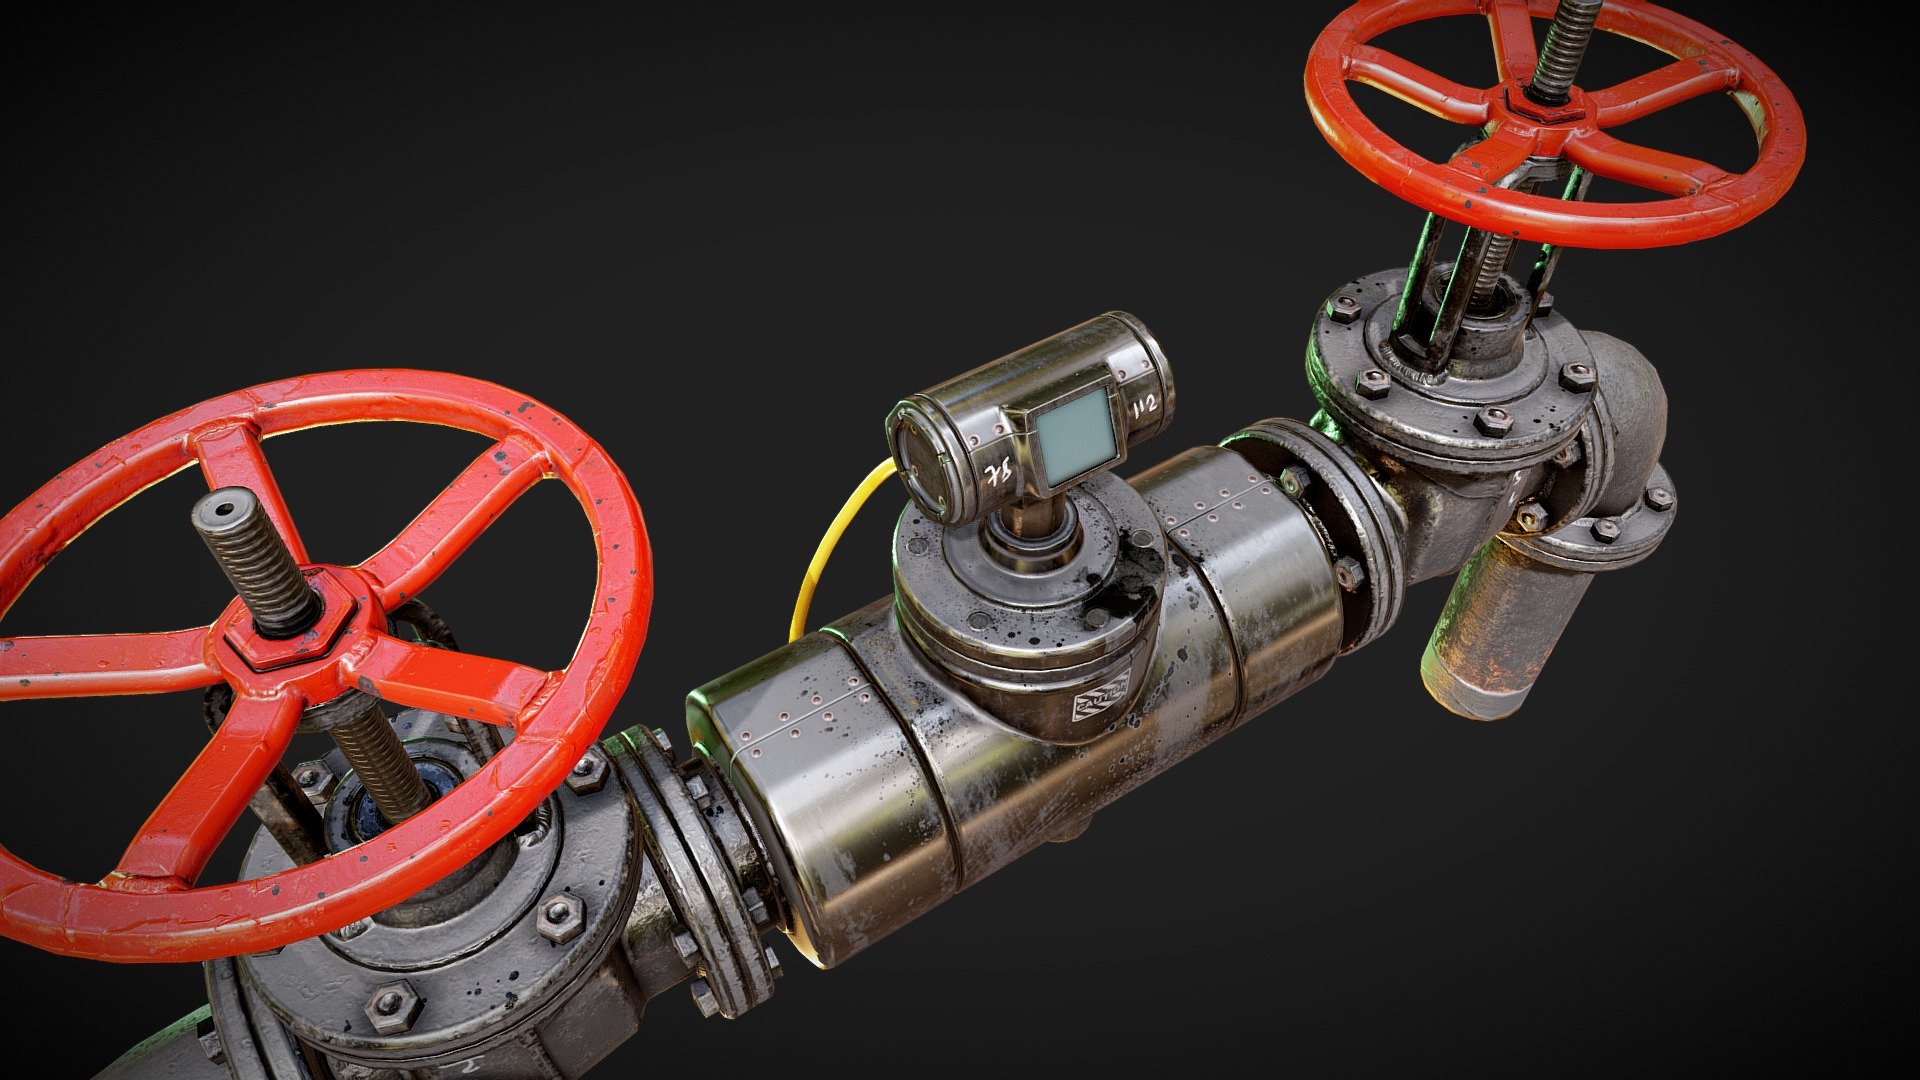 PBR Modular Pipes Set VR / AR / low-poly 3D model - Pipeline - 3D model by gamewarming 3d model